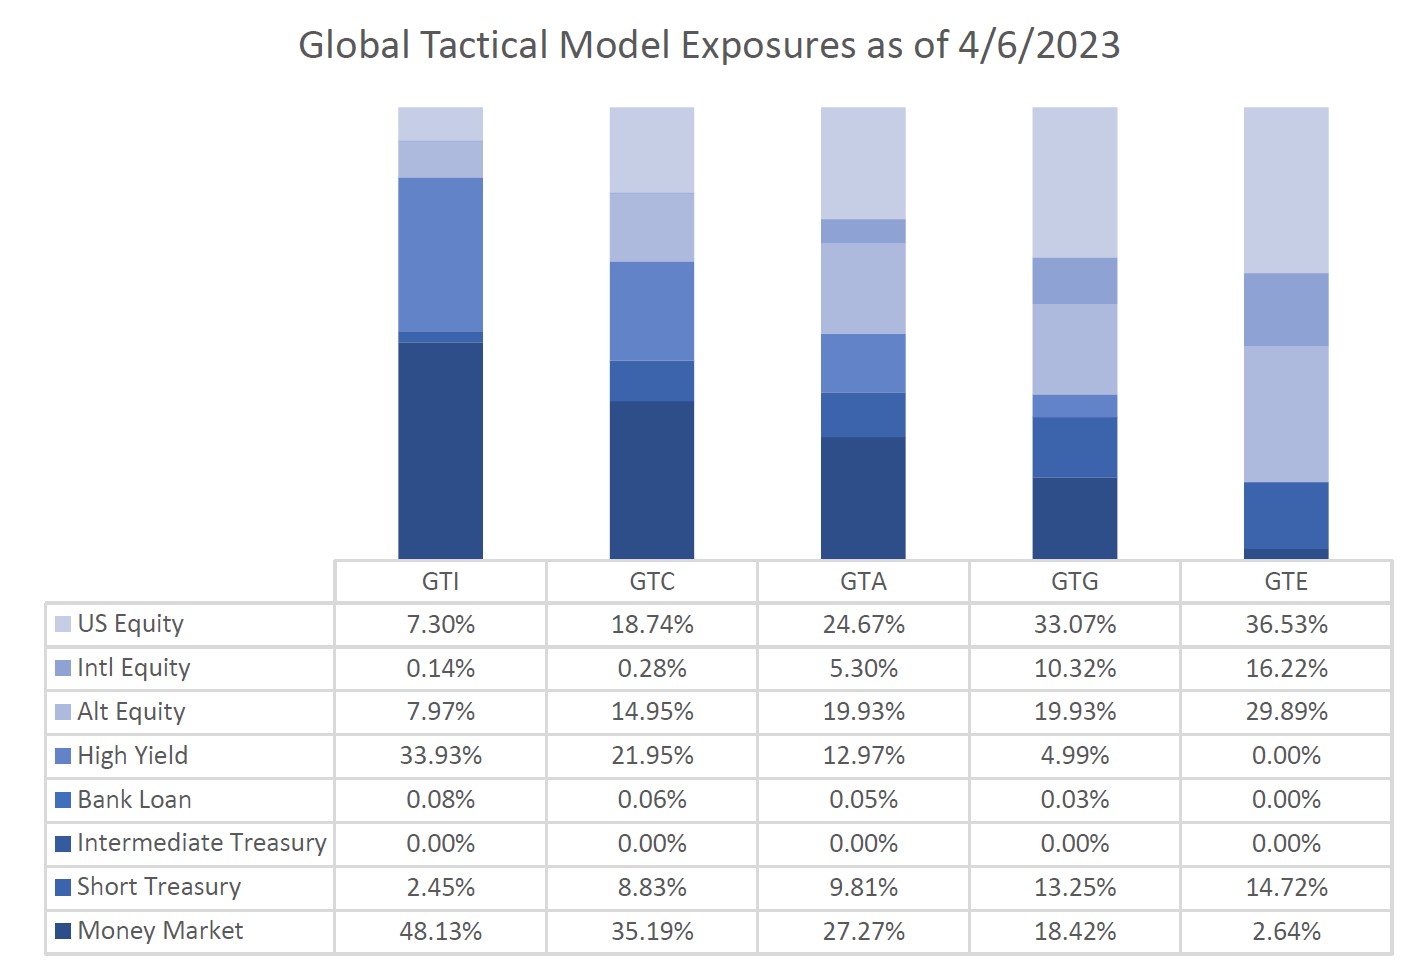 Global Tactical Model Exposure as of 04/06/2023